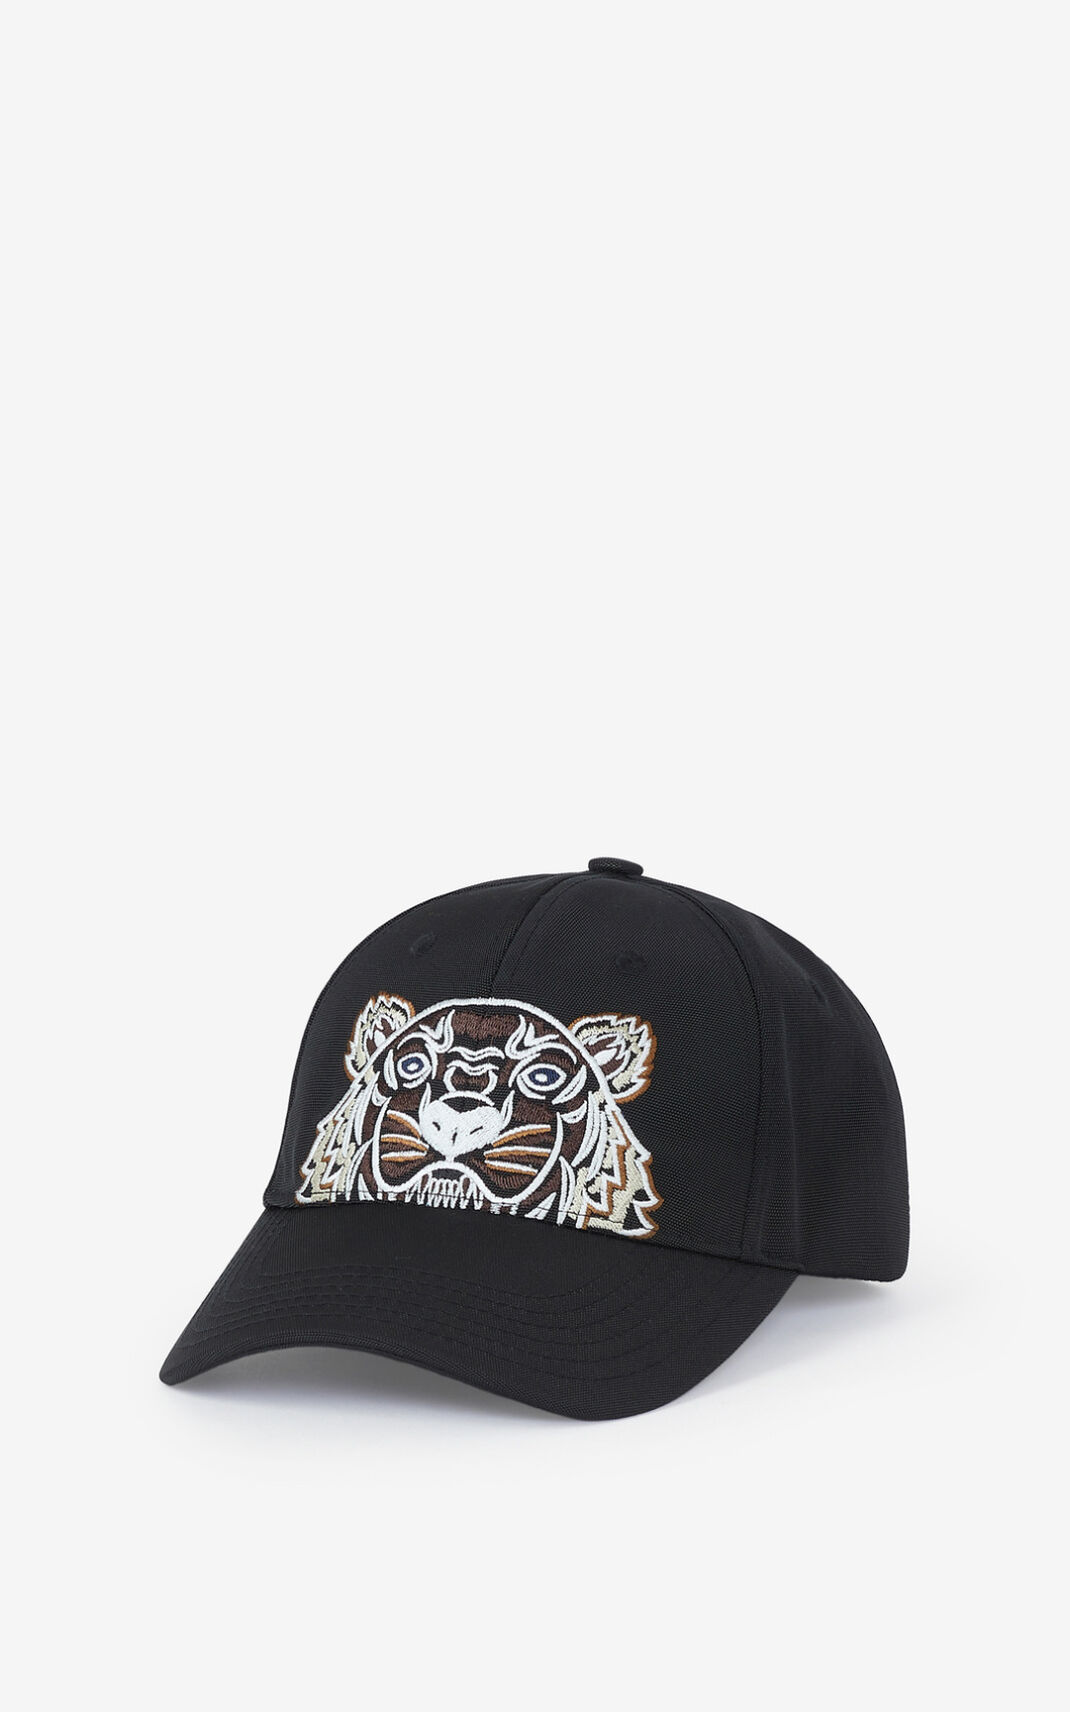 Kenzo Canvas Kampus Tiger Cap Black For Mens 8956GKBED